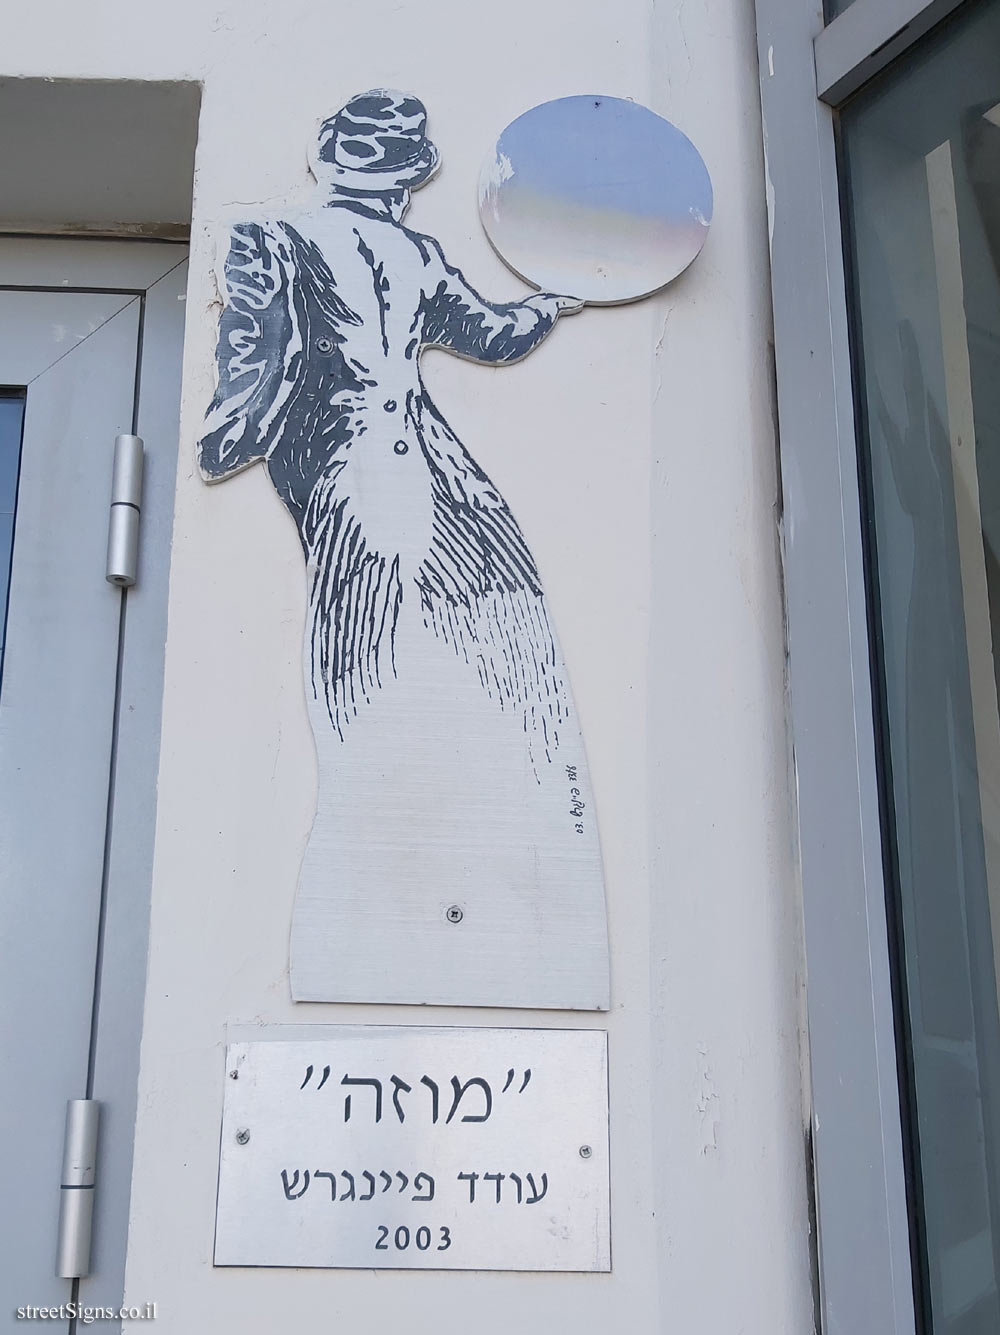 Yavne - "Muse" Outdoor painting by Oded Feingersh - Du’ani Blvd/Kdoshe Ca’ir, Yavne, Israel